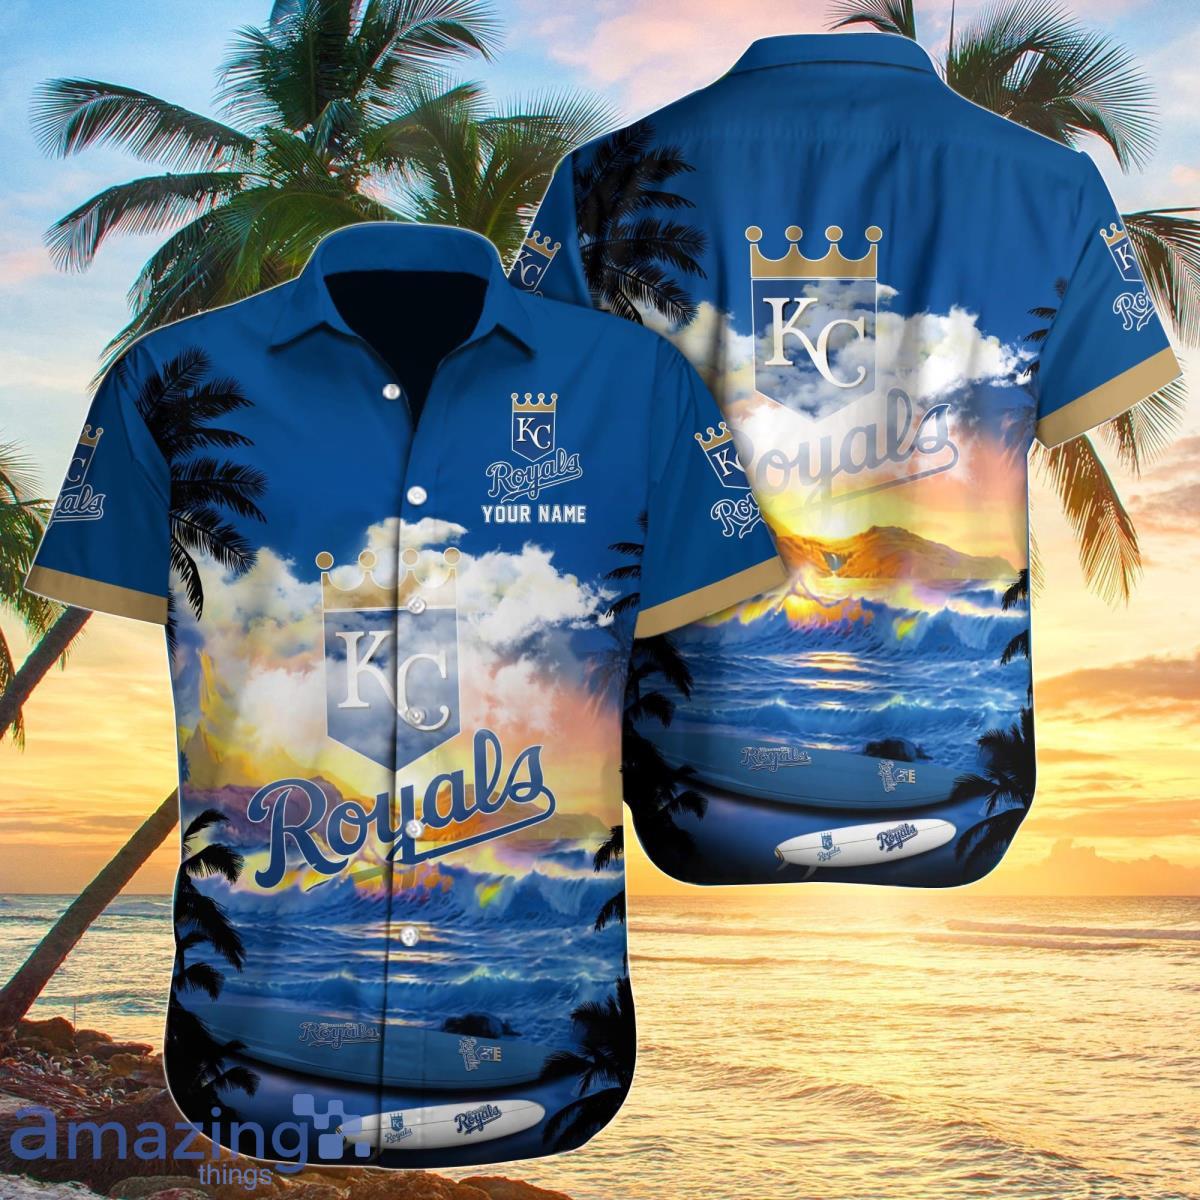 kansas city royals polo shirt